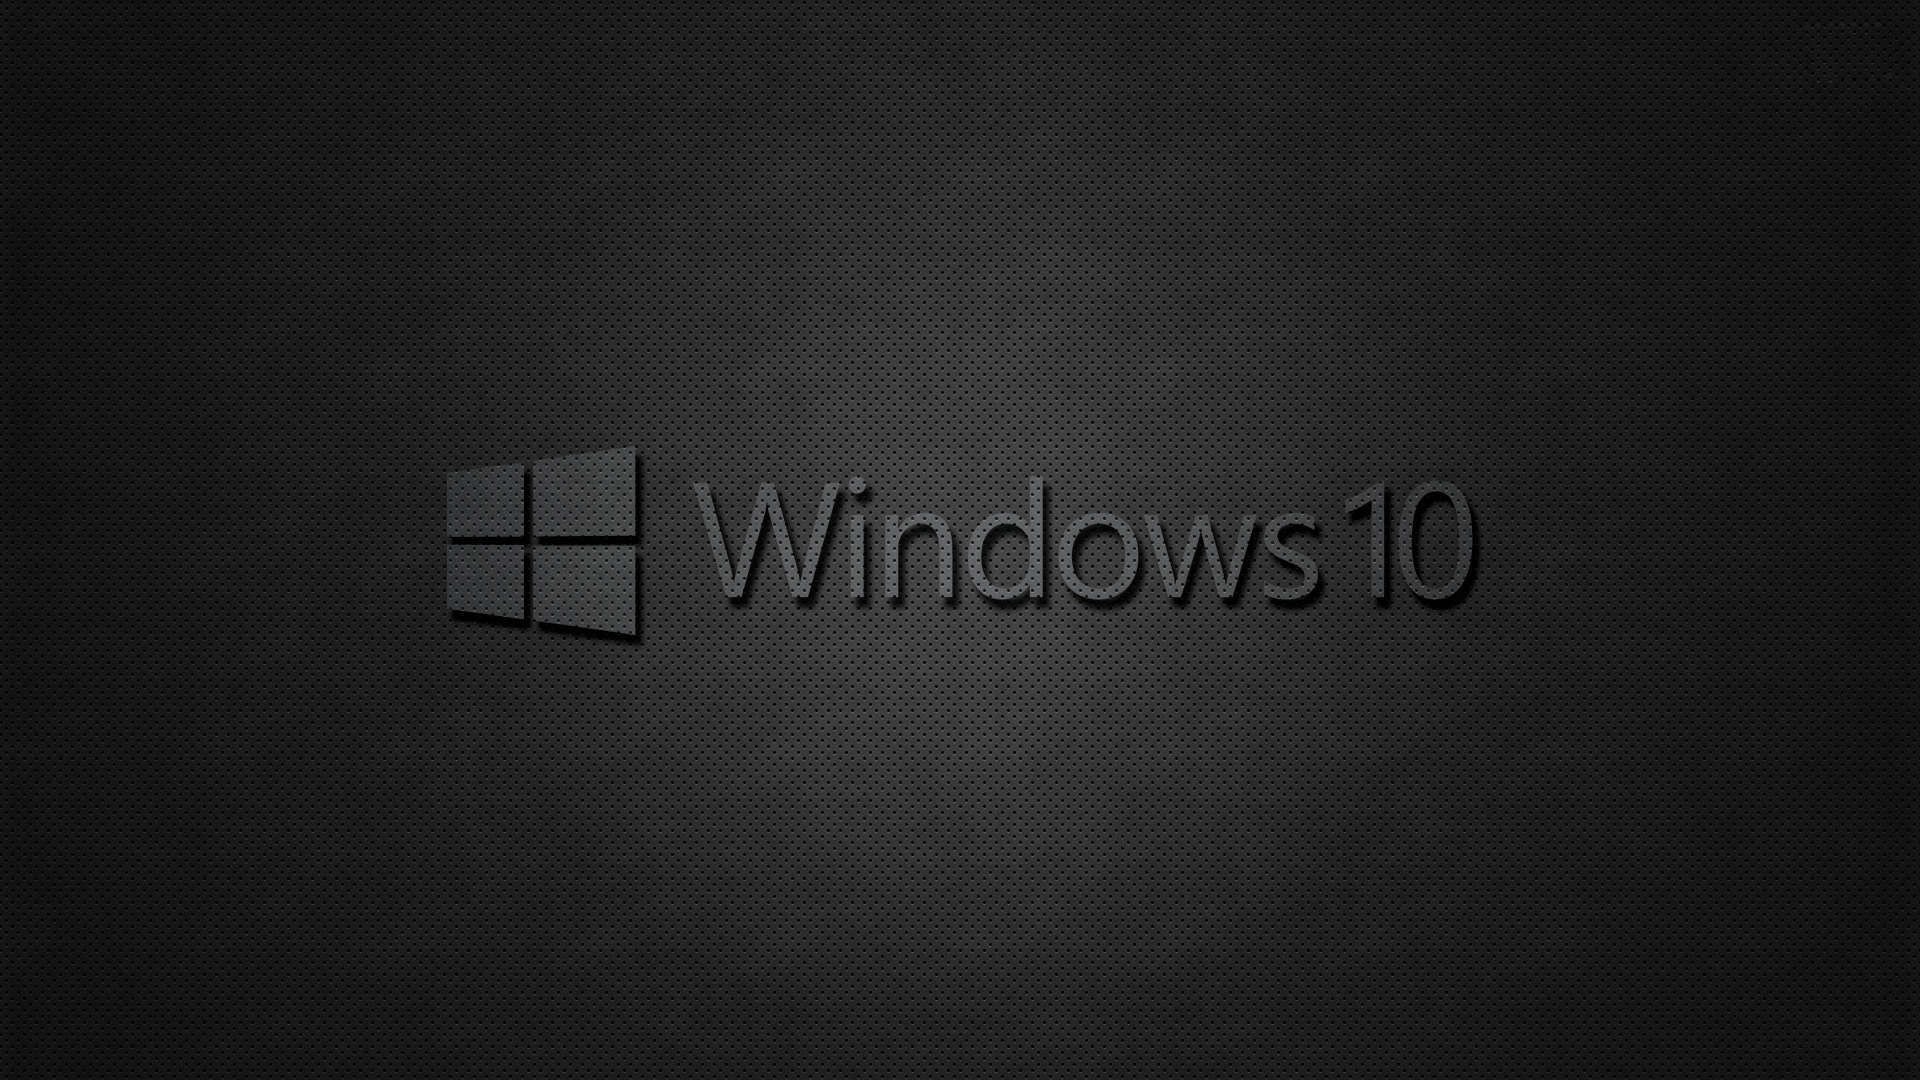 Windows 10 Black Wallpaper HD For Laptopwalpaperlist.com